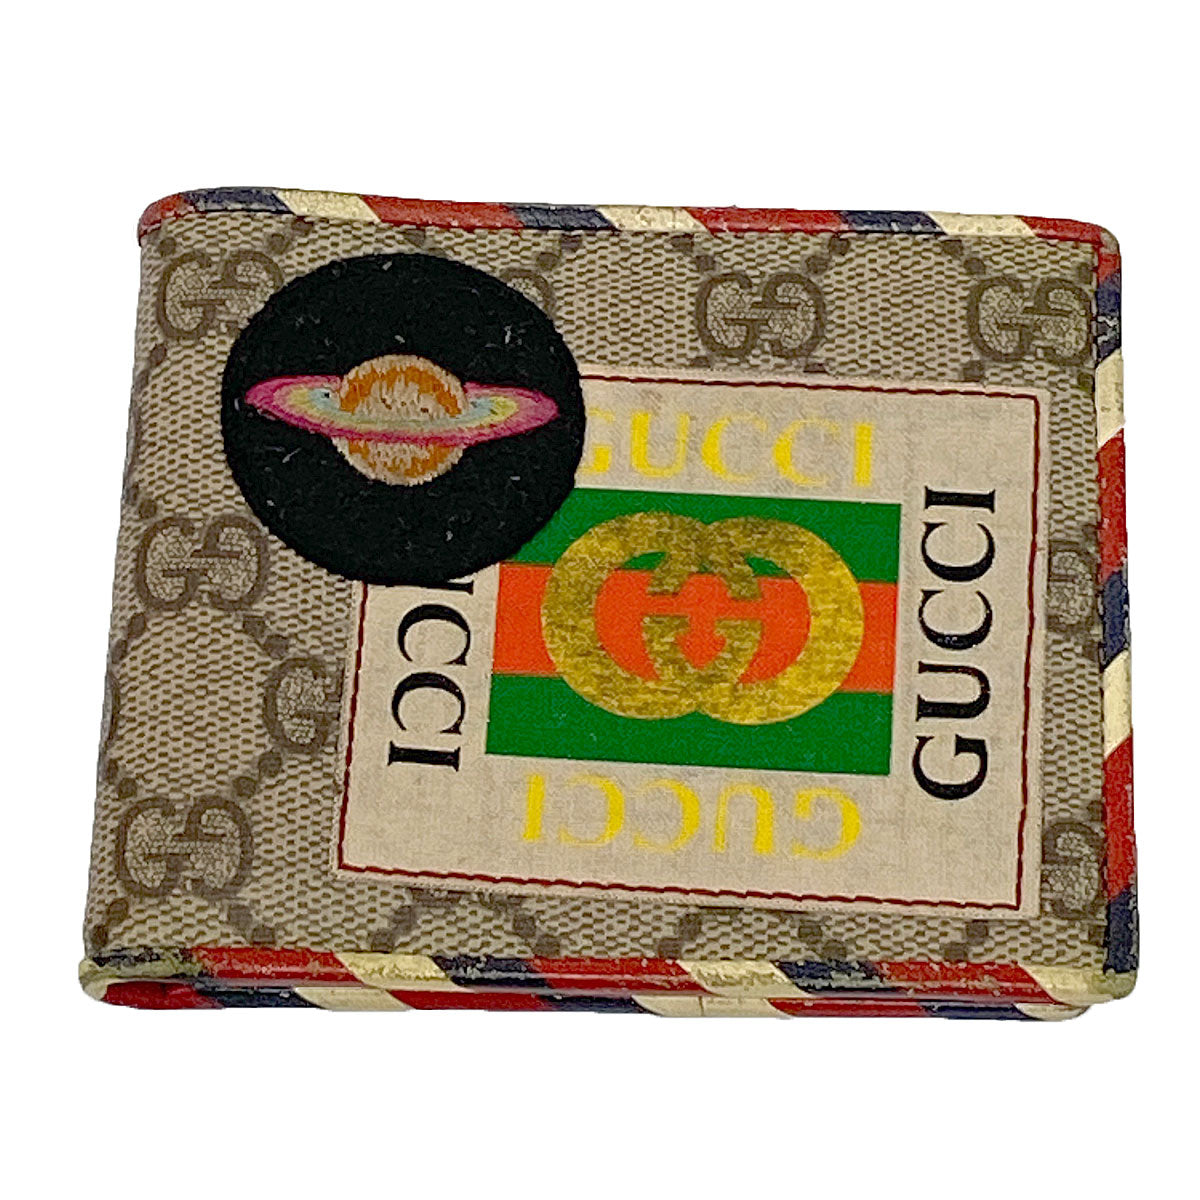 Gucci Men's Night Courrier GG Supreme Wallet